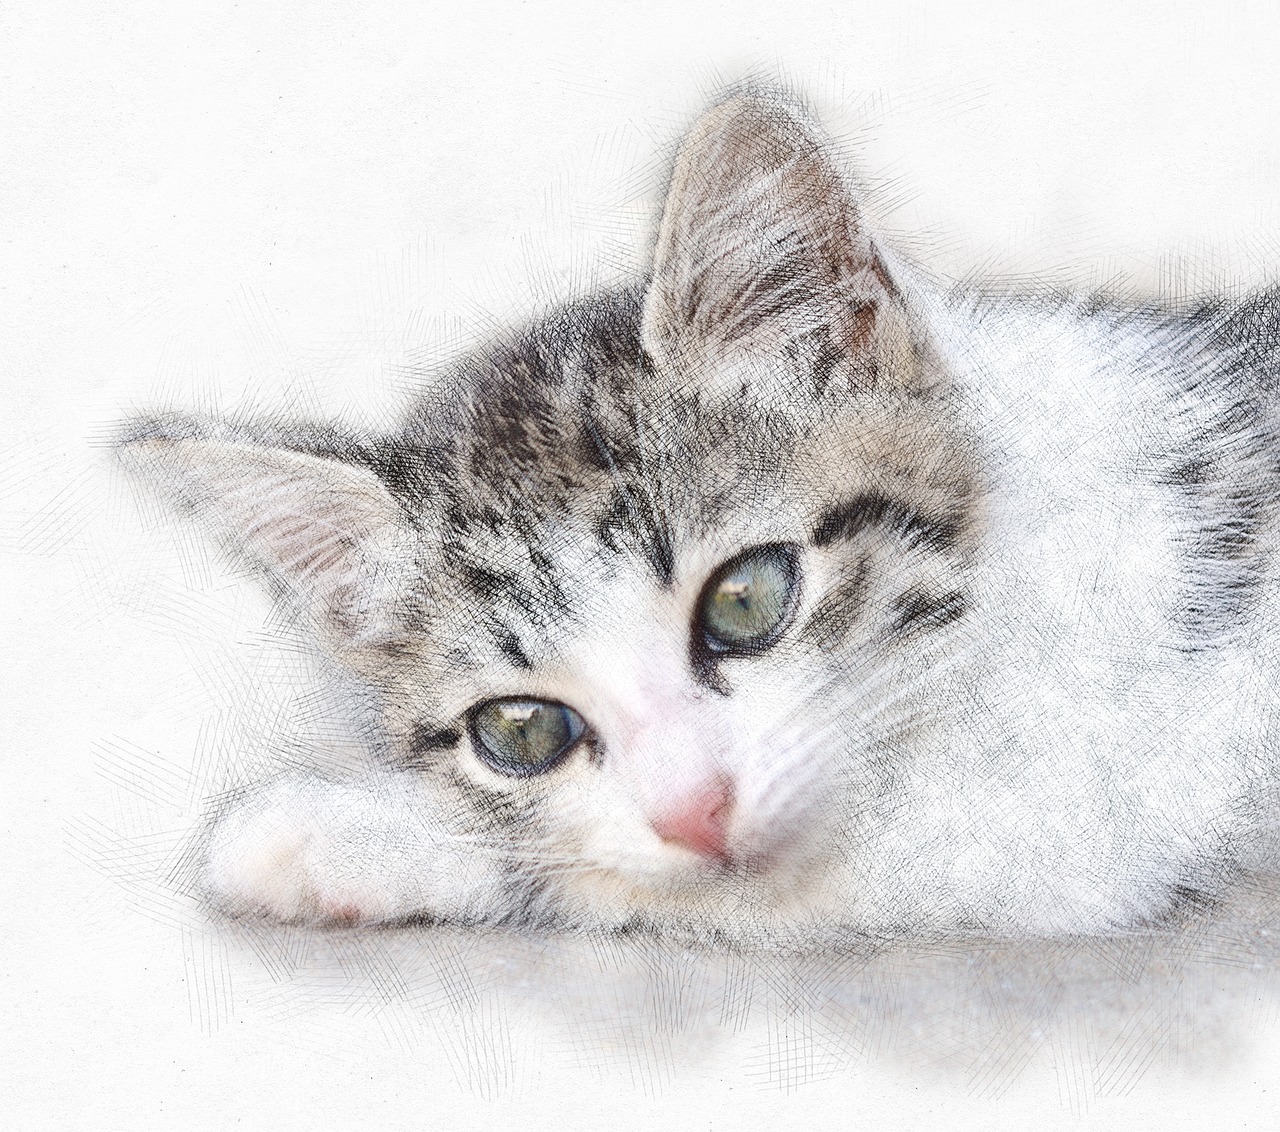 Image - cat animal furry cute closeup